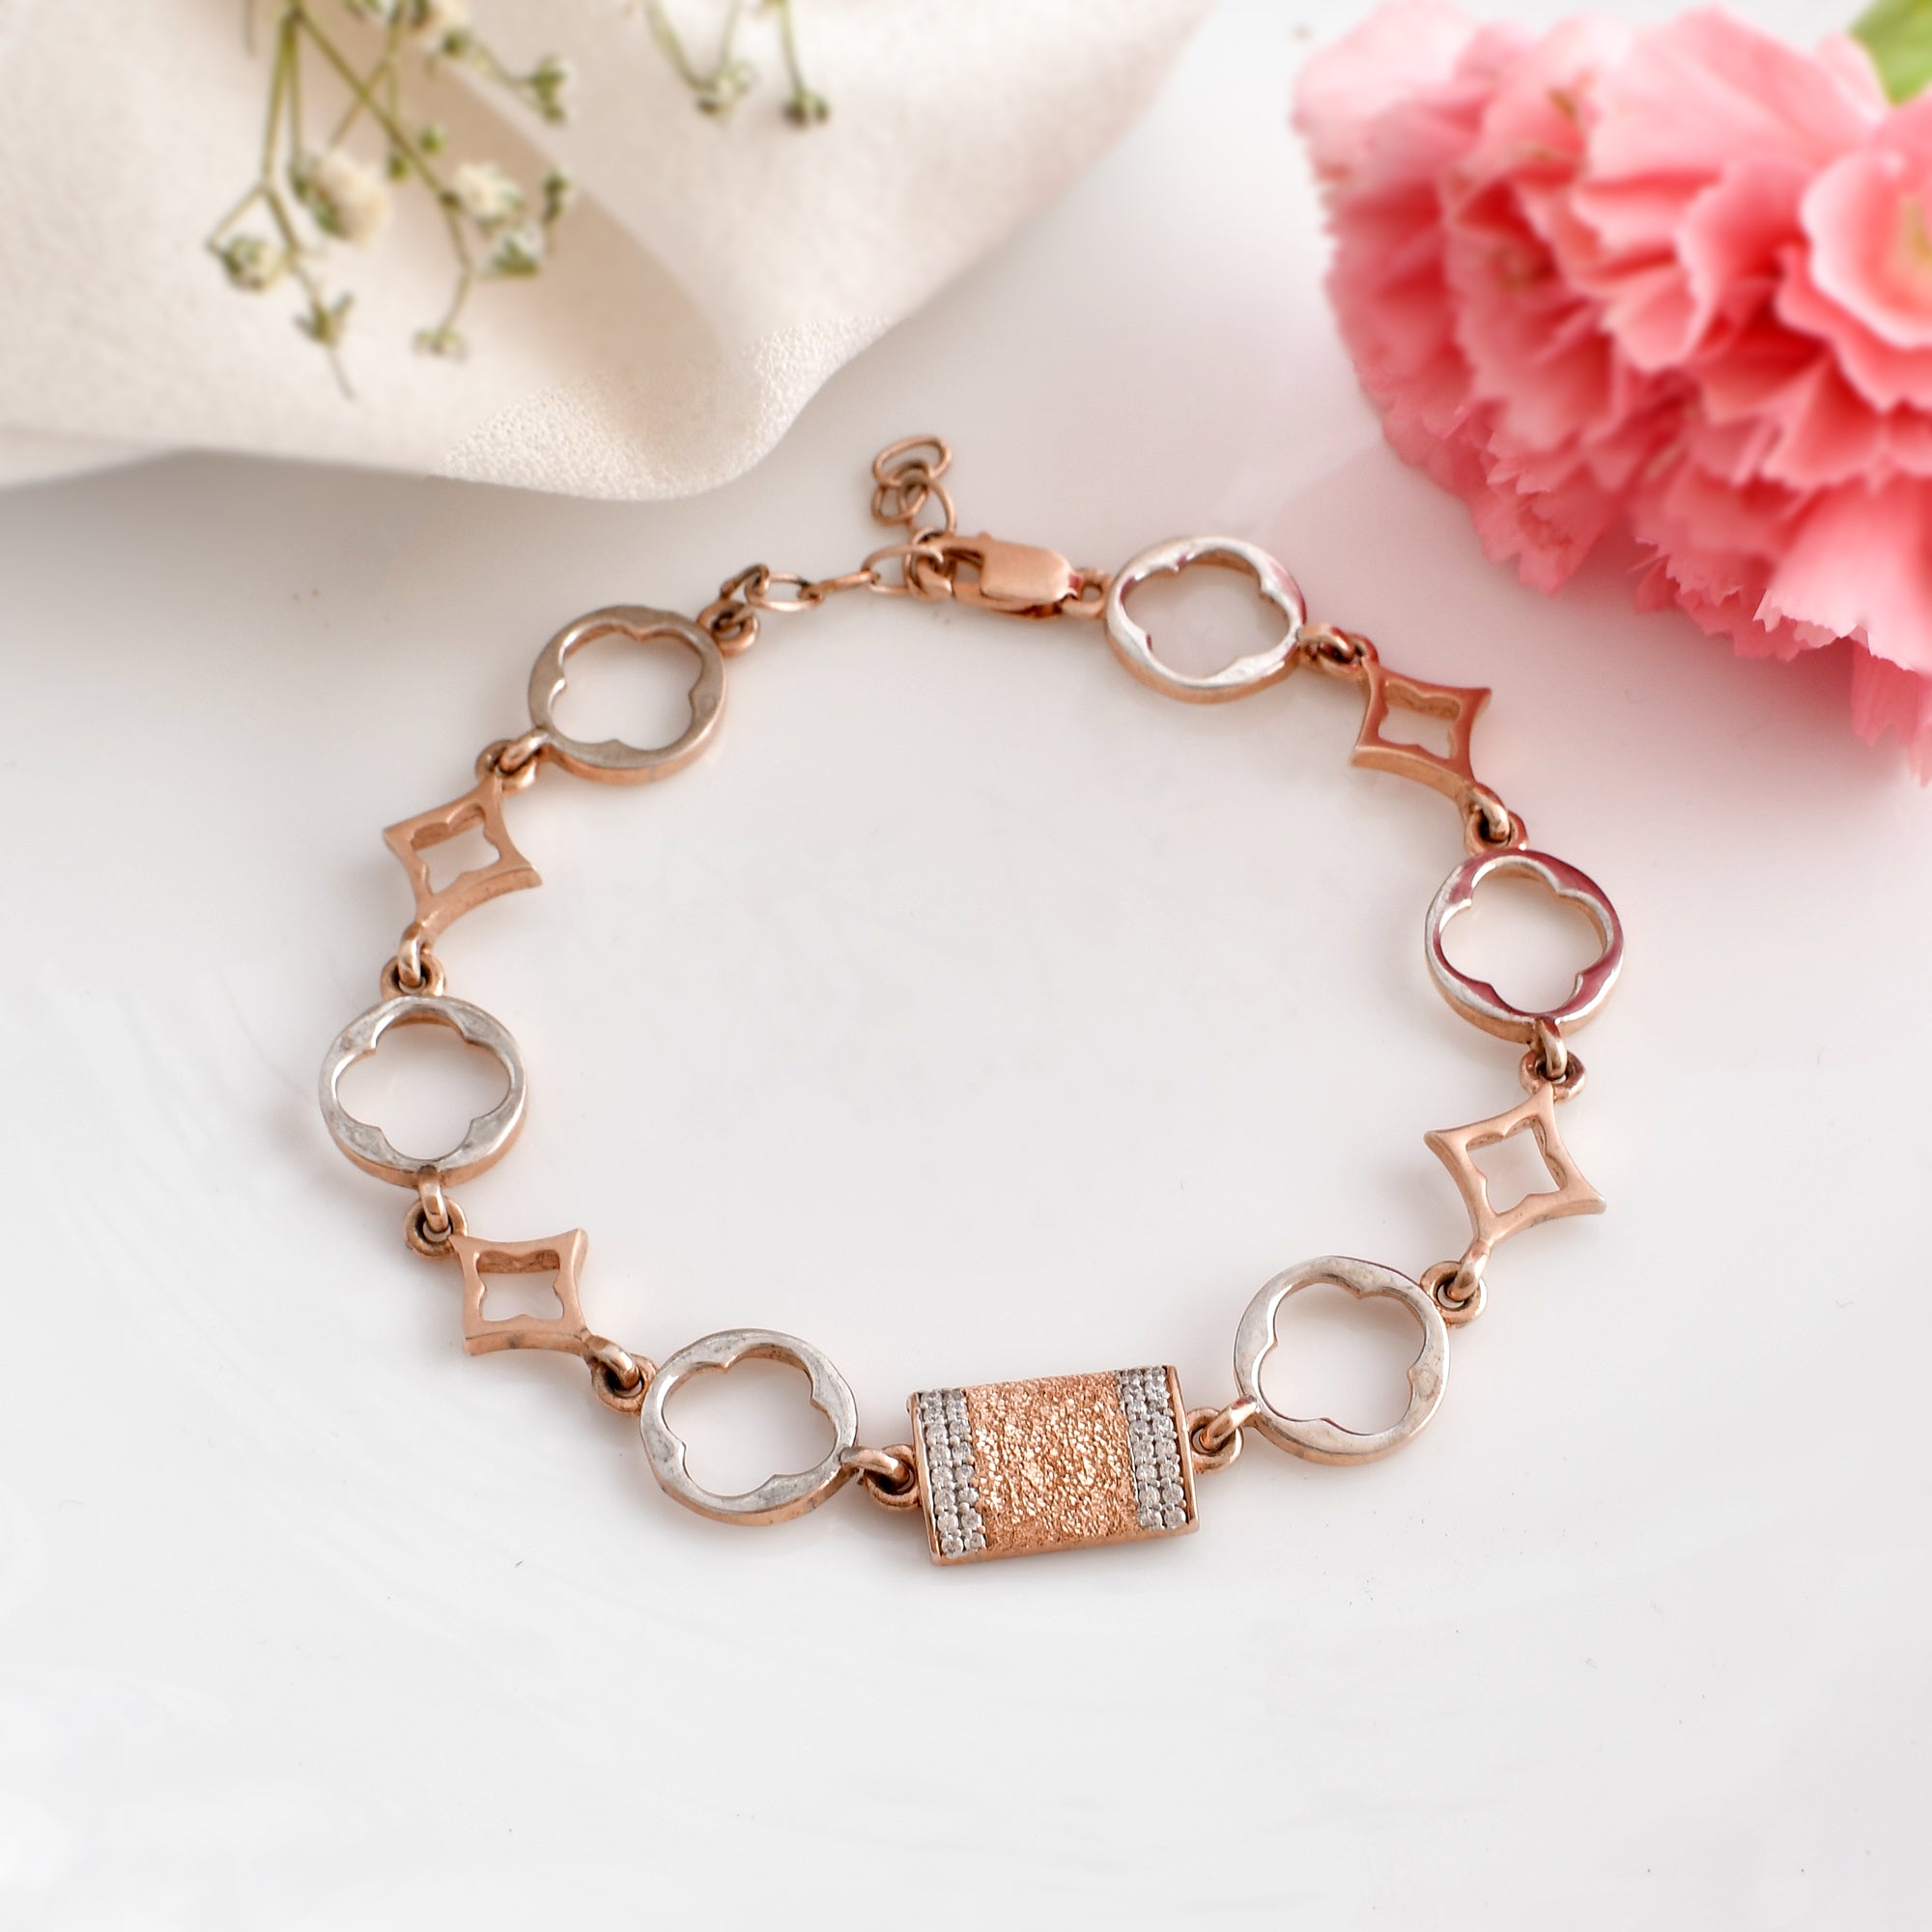 StyleE) Hand Jewelry Stylish Bracelet Geometric Unisex Fashion Accessory  Gift Copper – Hill Top Jewelry